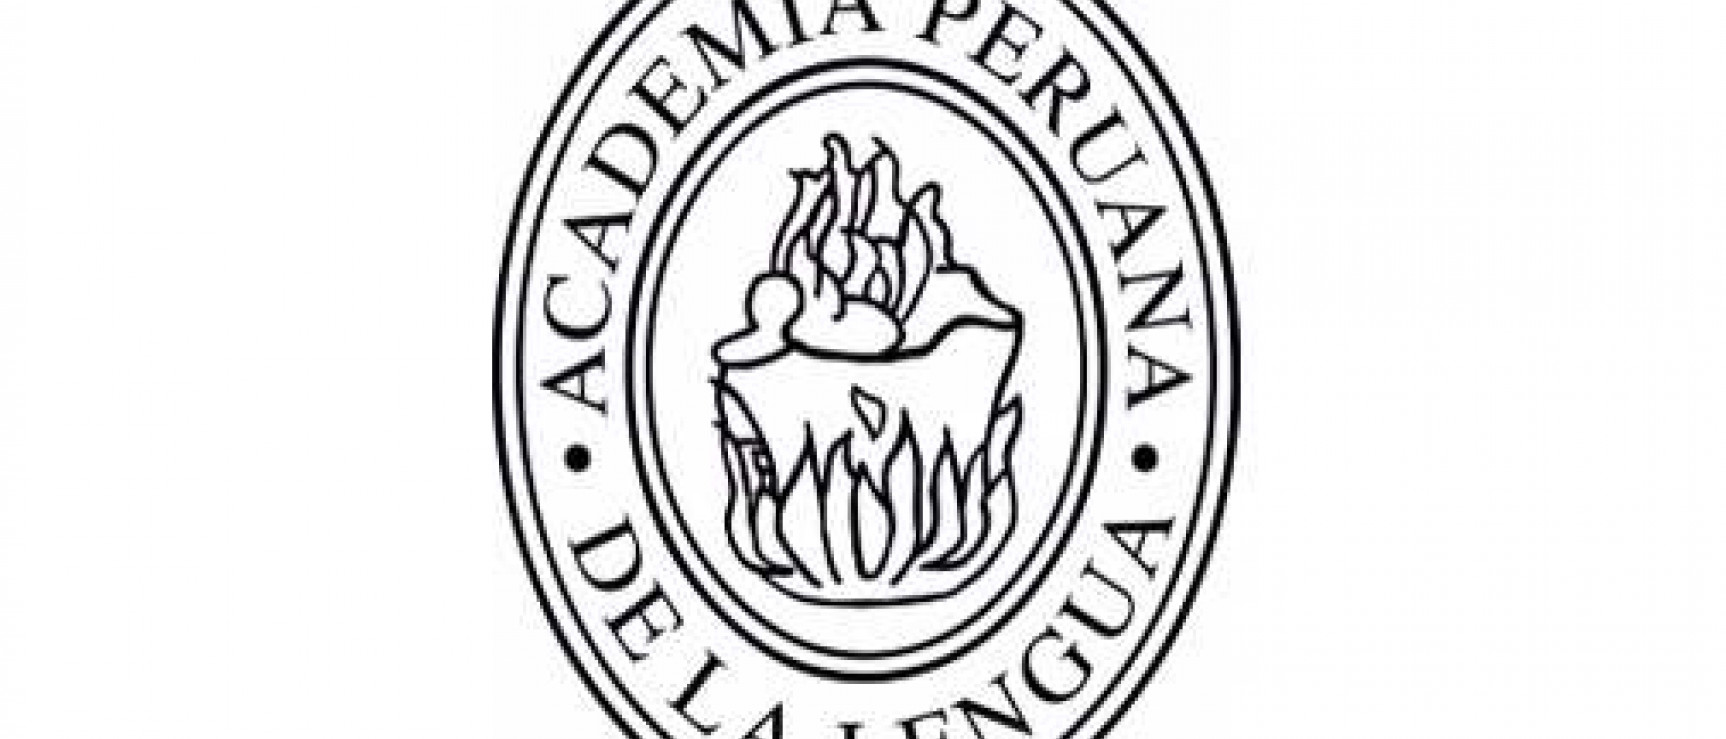 Escudo de la Academia Peruana de la Lengua (APL)